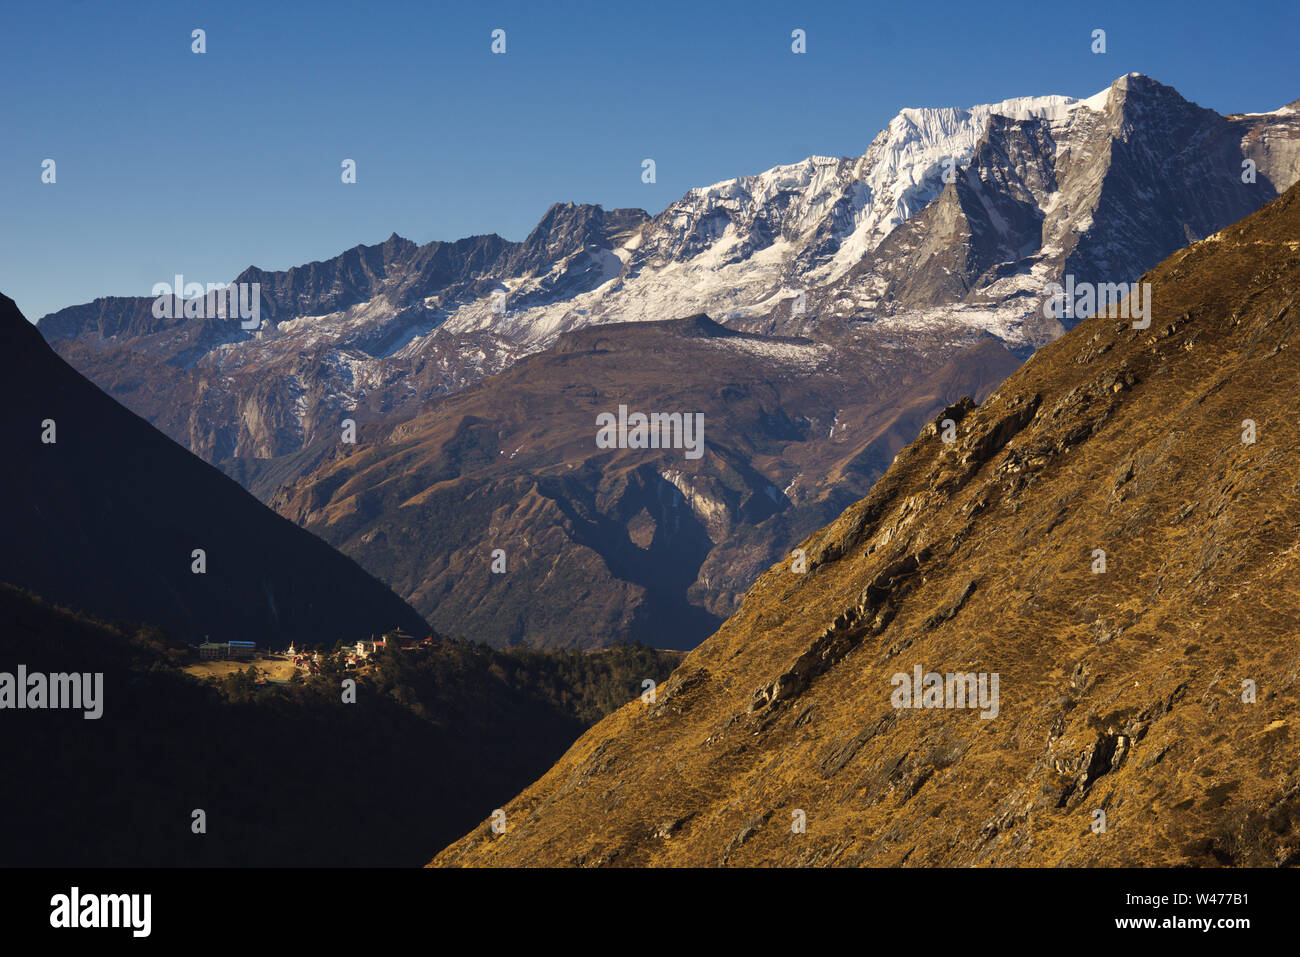 High view towards the monastry of Tengboche, Everest region, Nepal Stock Photo